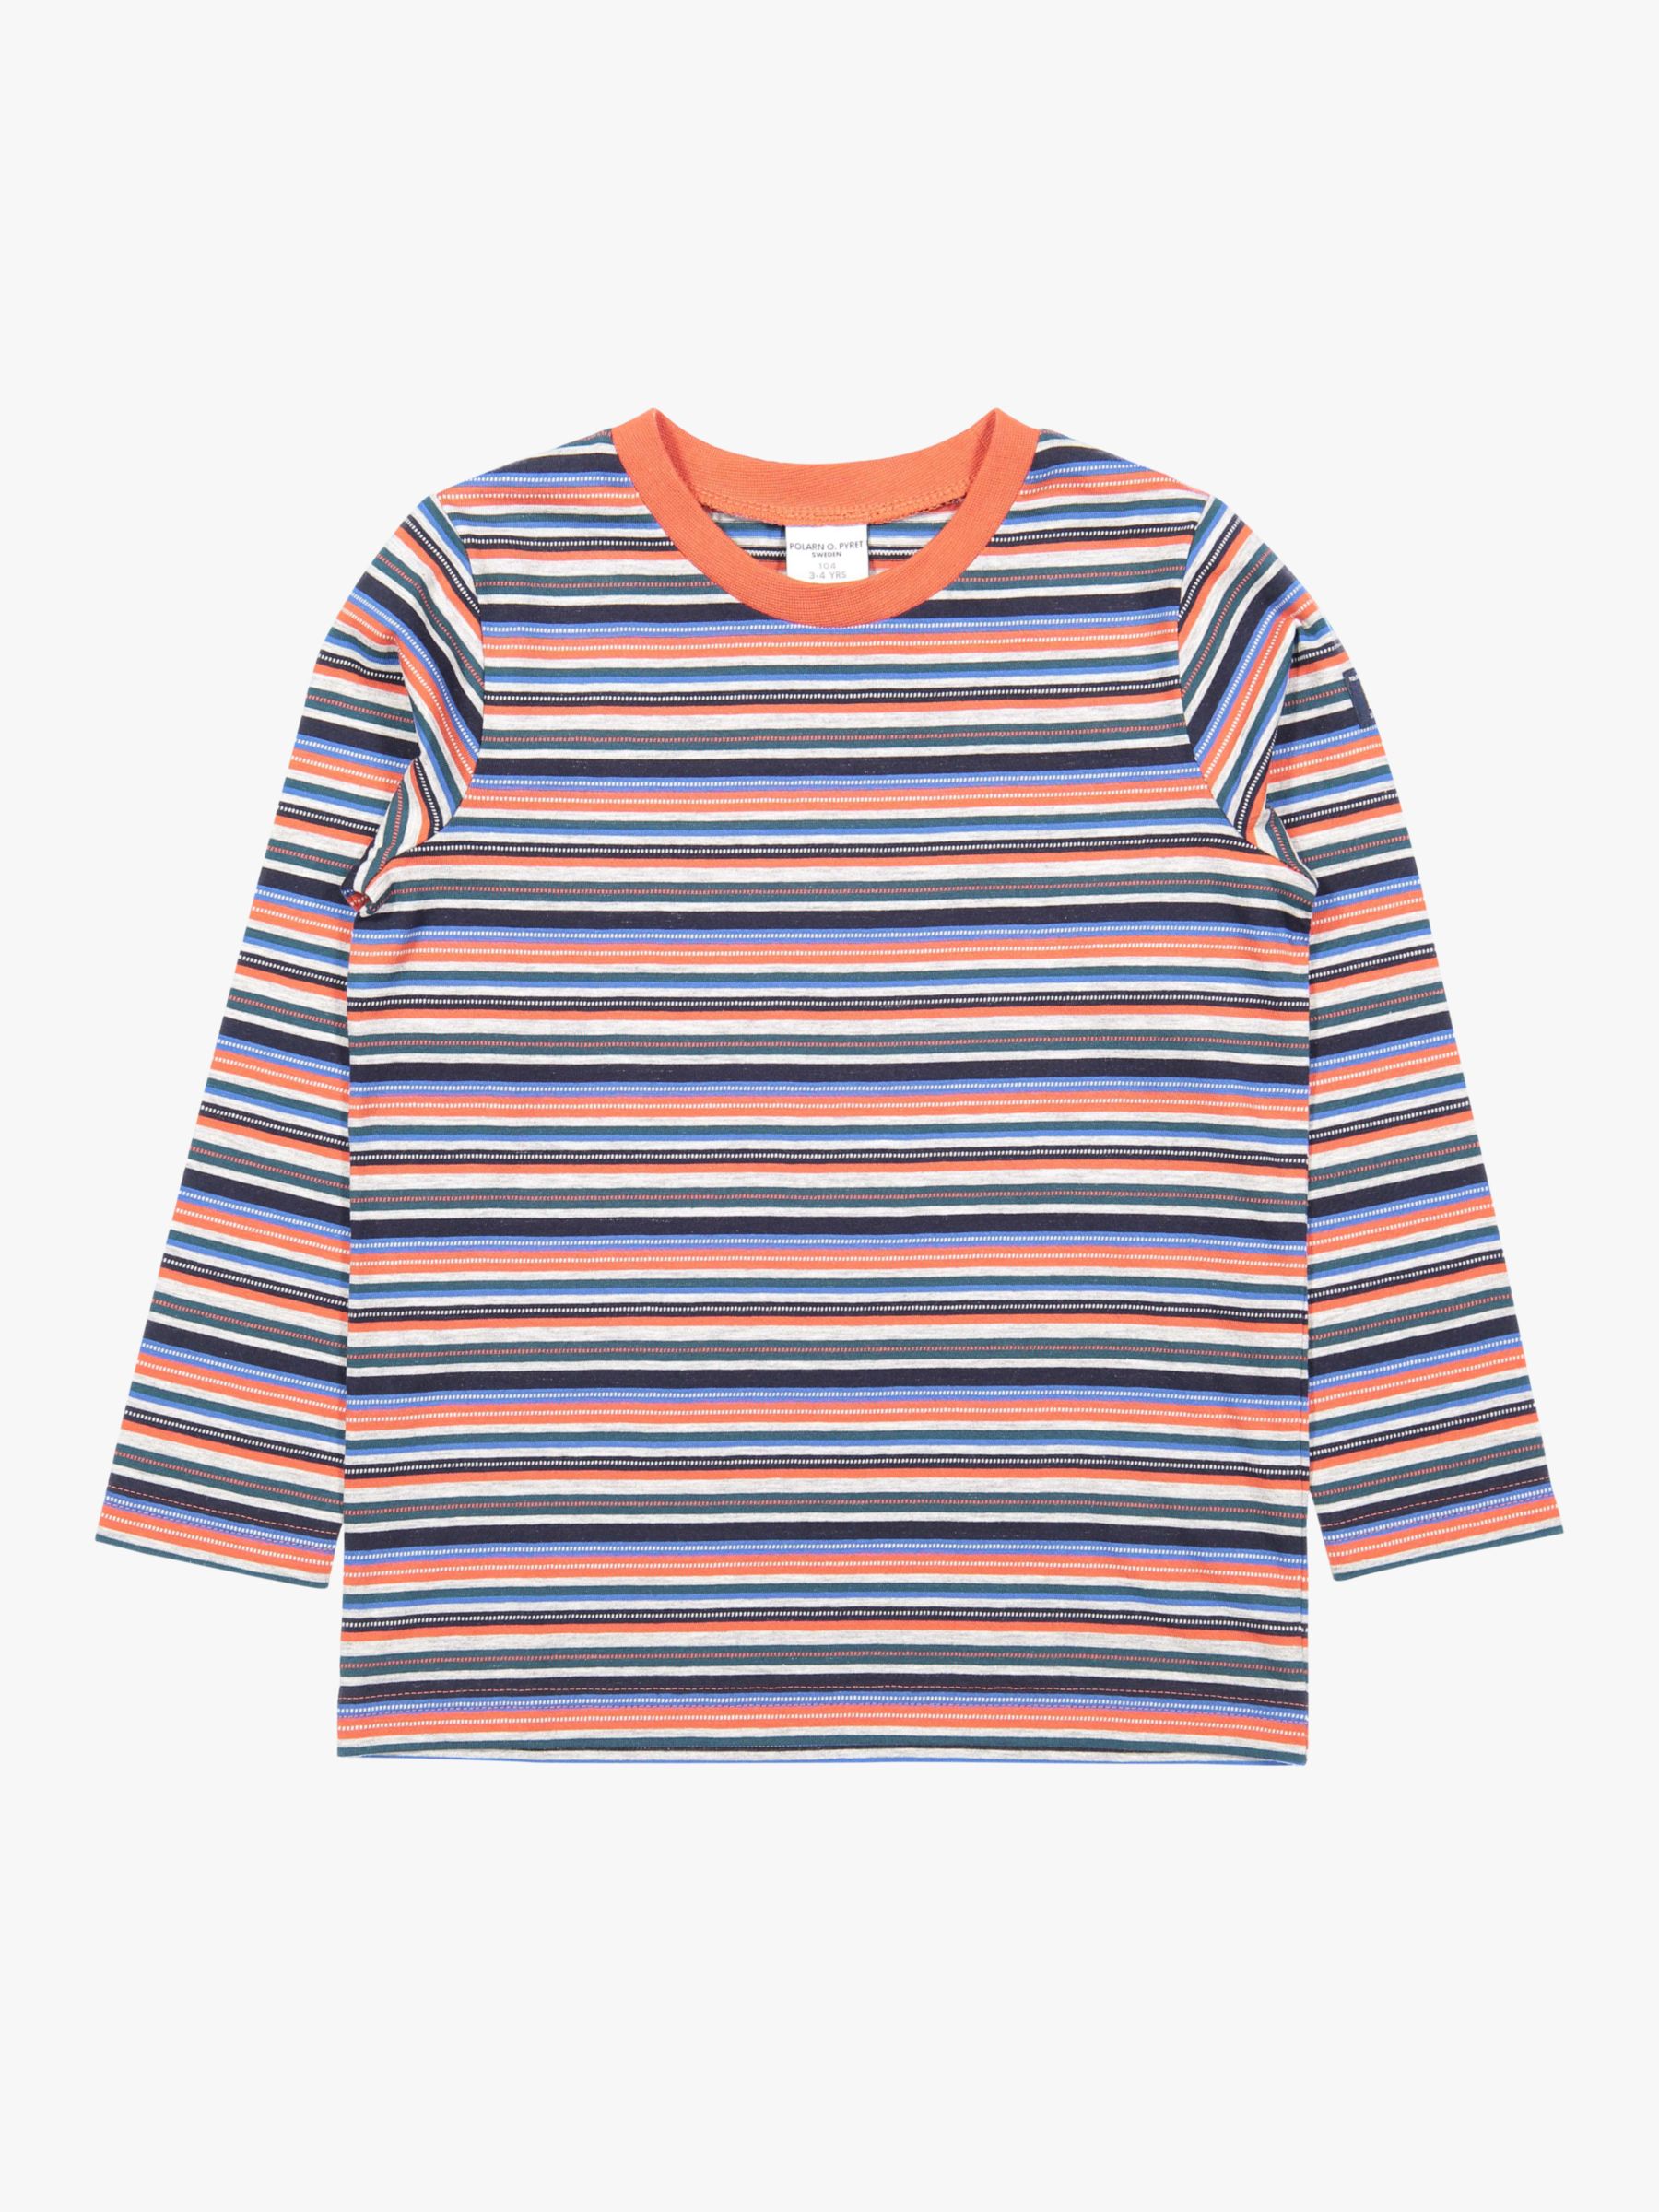 Polarn O. Pyret Children's Striped Top, Orange